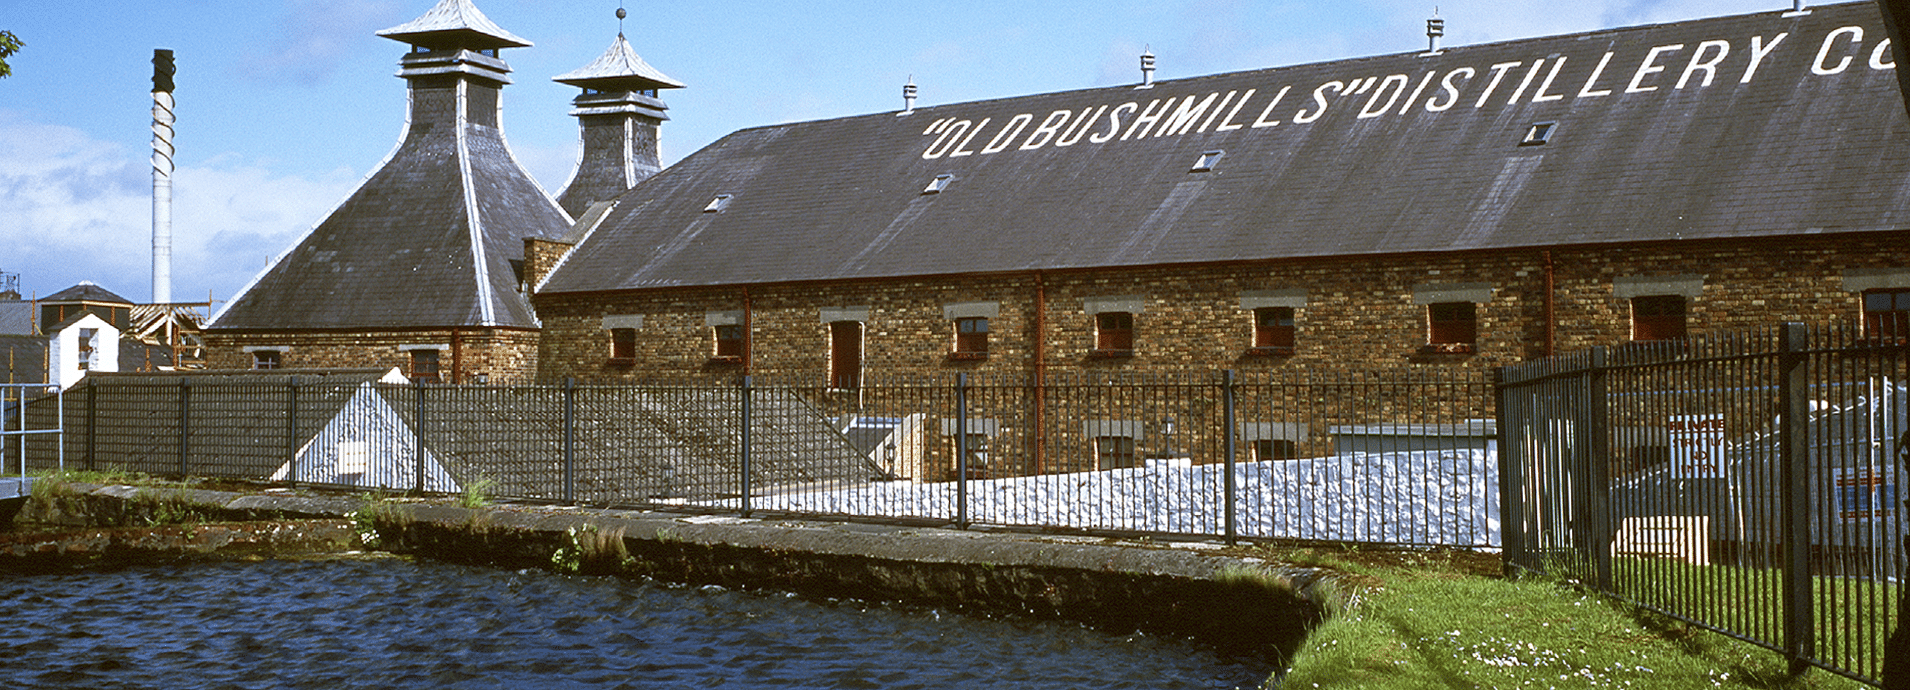 bushmills-distillery-1910x710 (1)